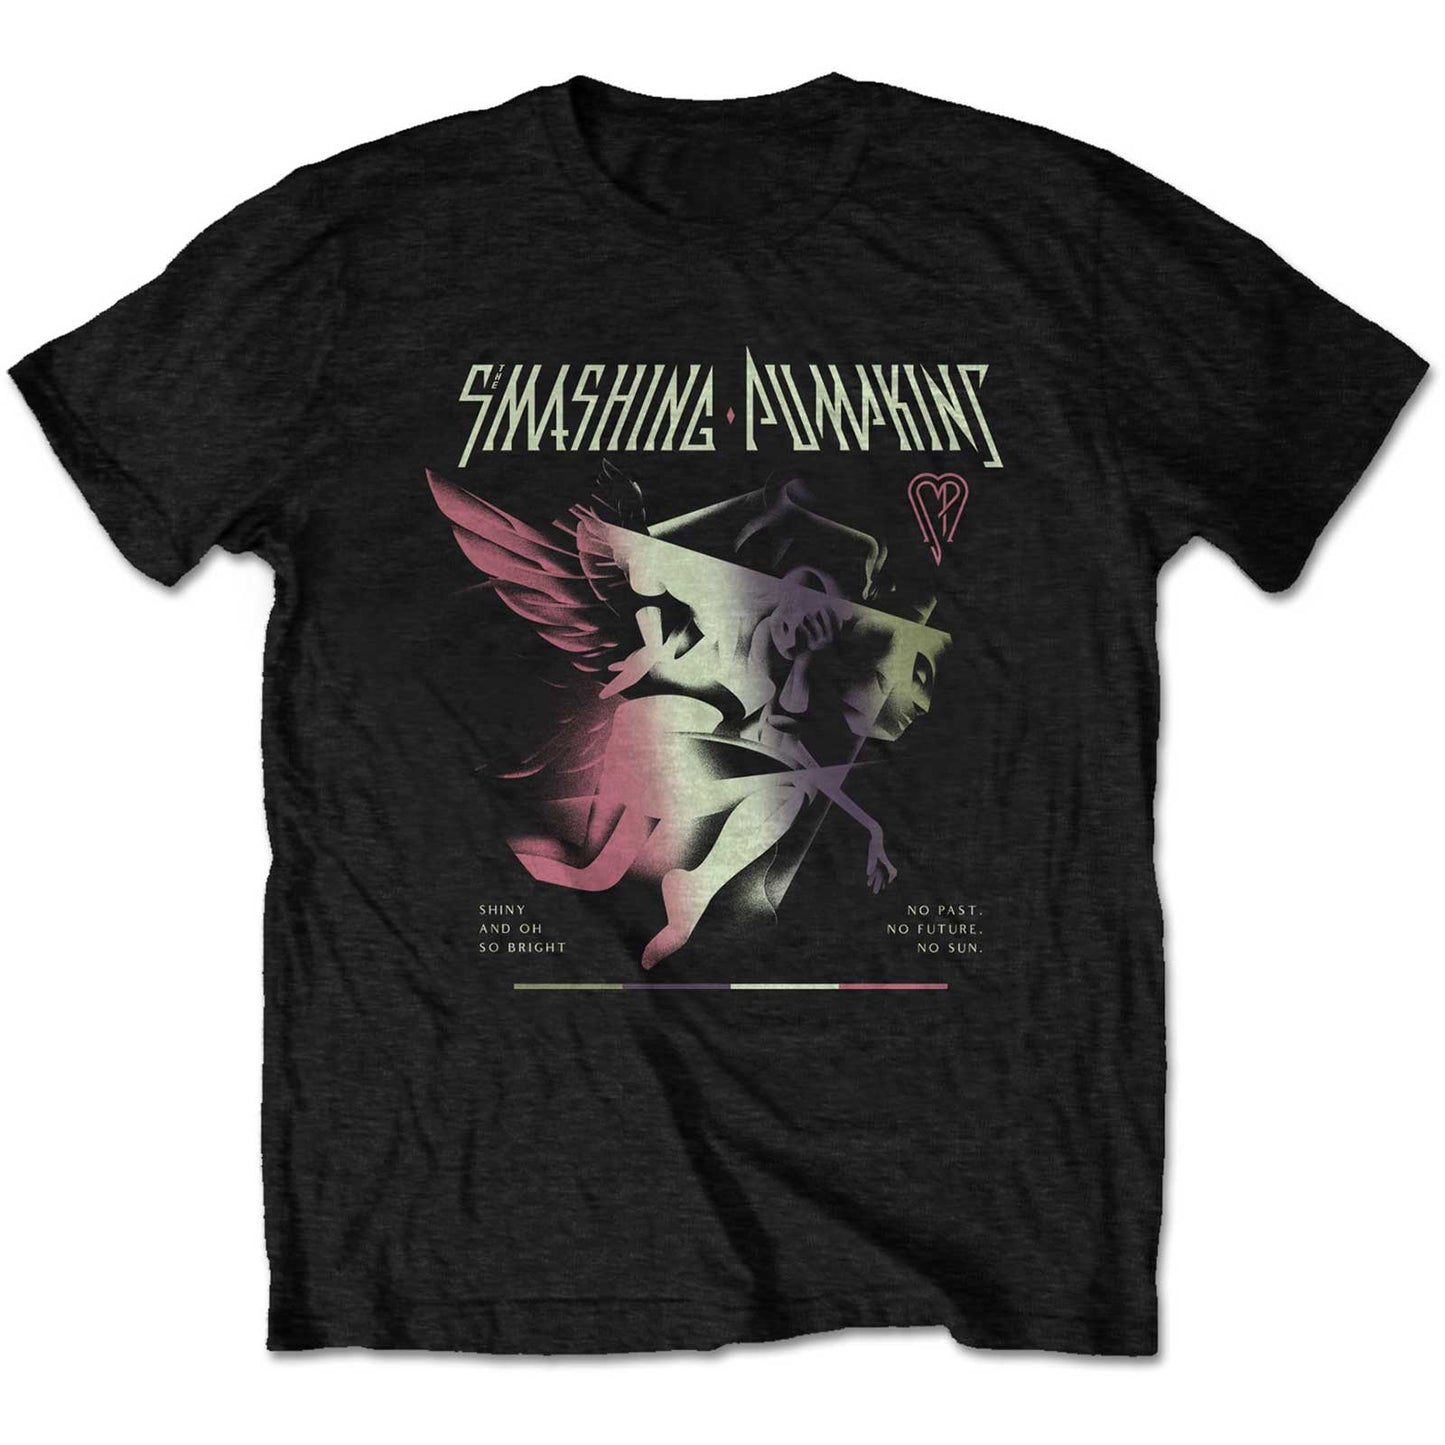 The Smashing Pumpkins T-Shirt: Shiny